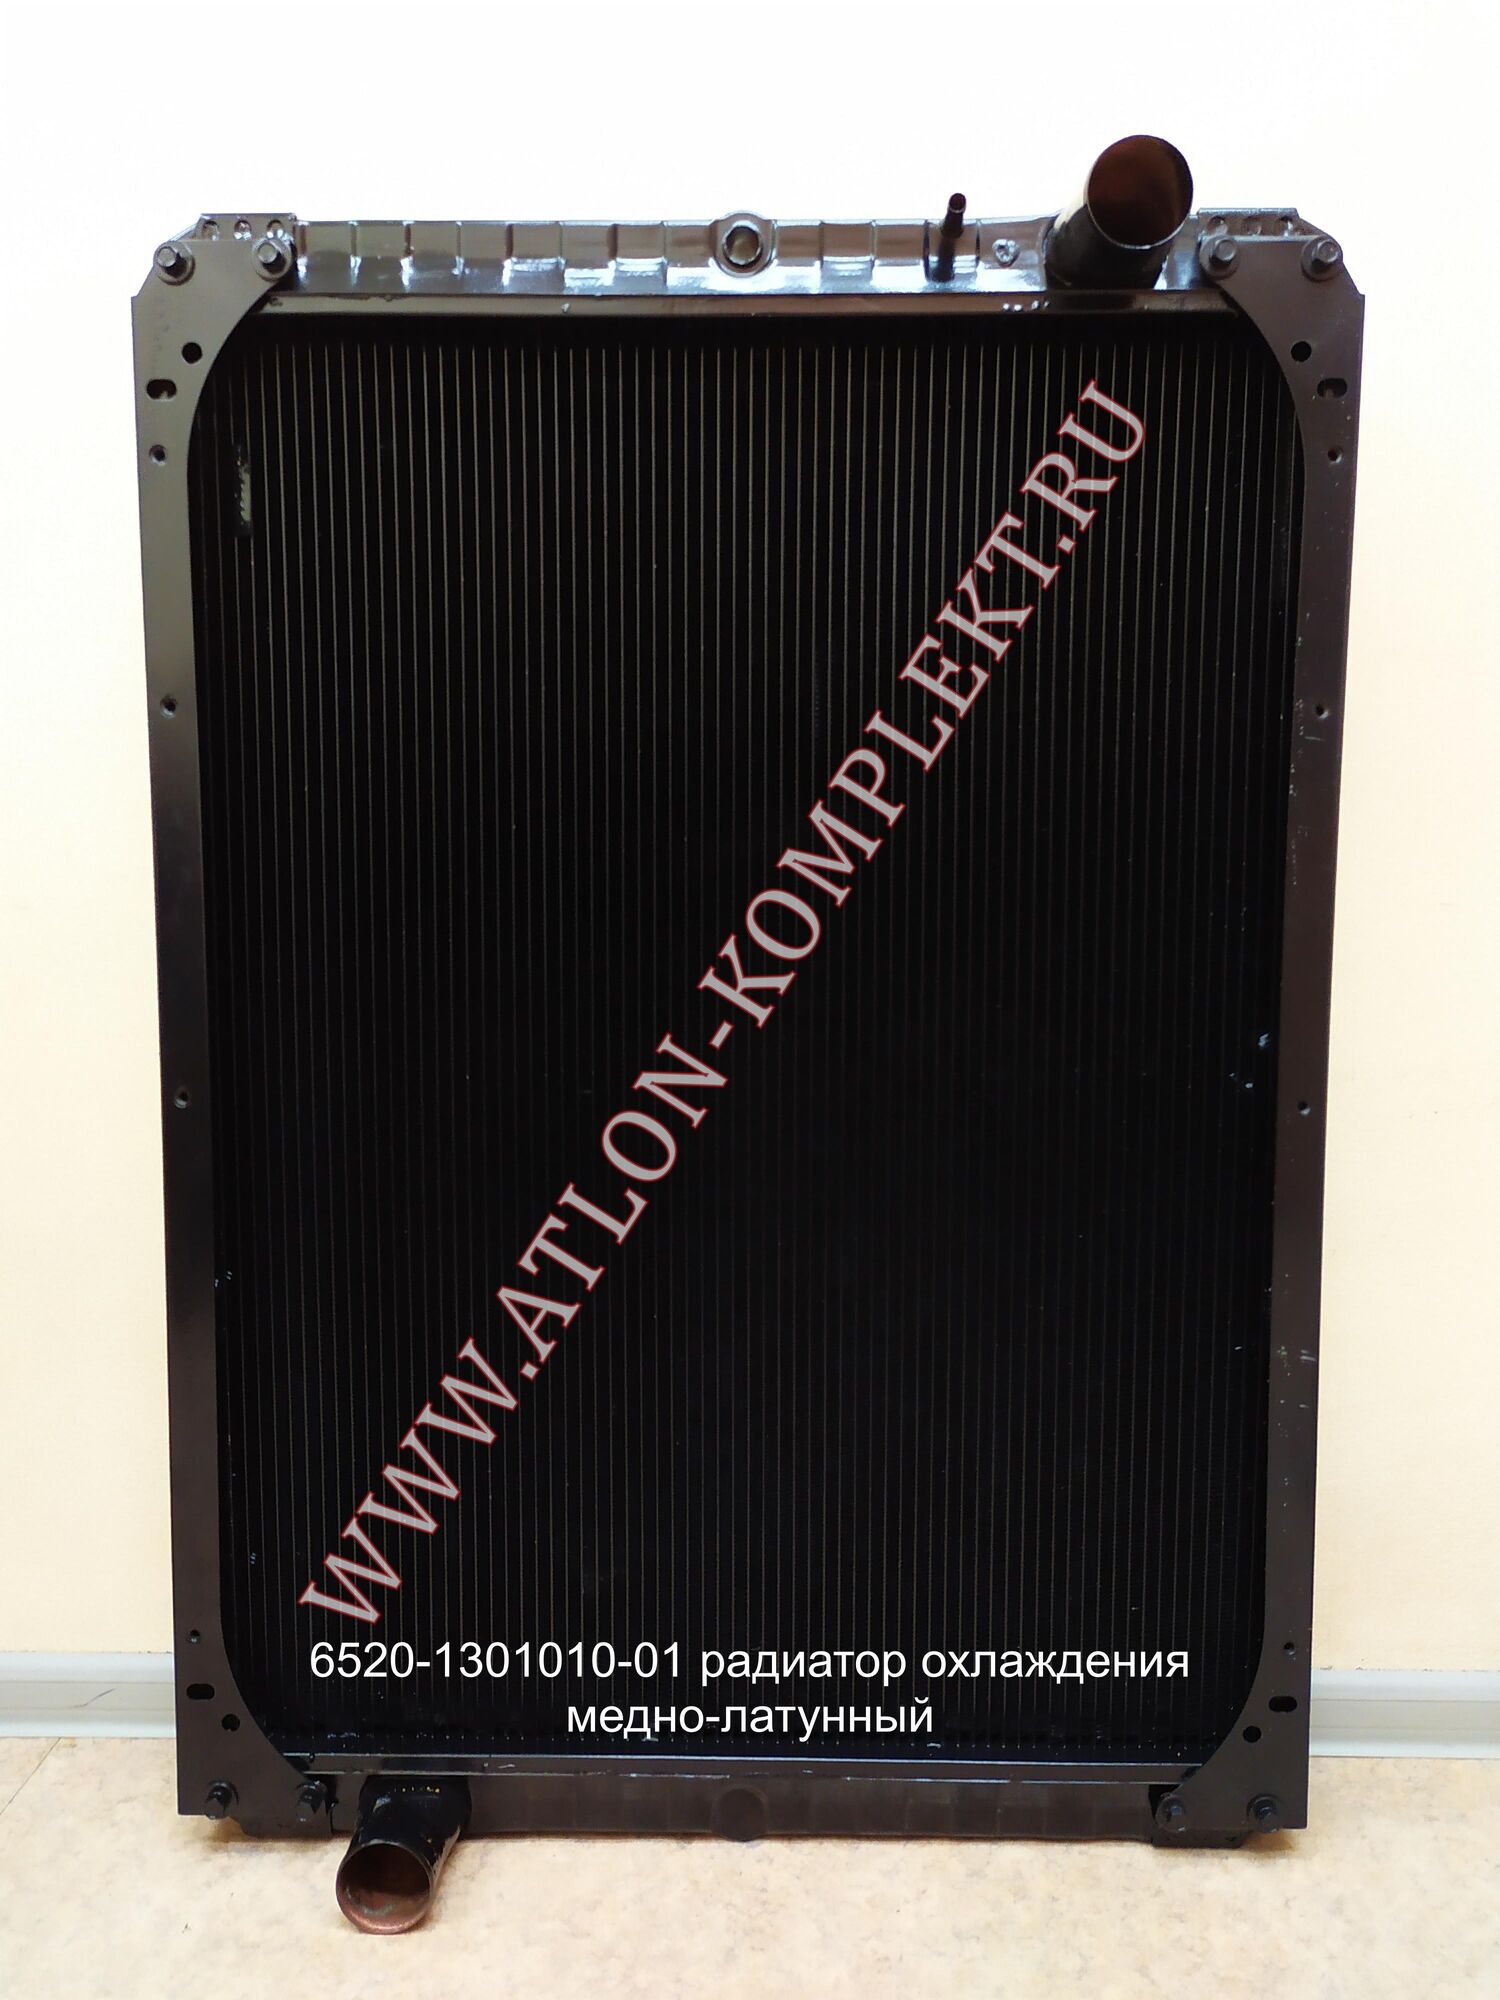 Радиатор для КАМАЗ-6520, -43118 медный 6520-1301010-01 3-х рядный